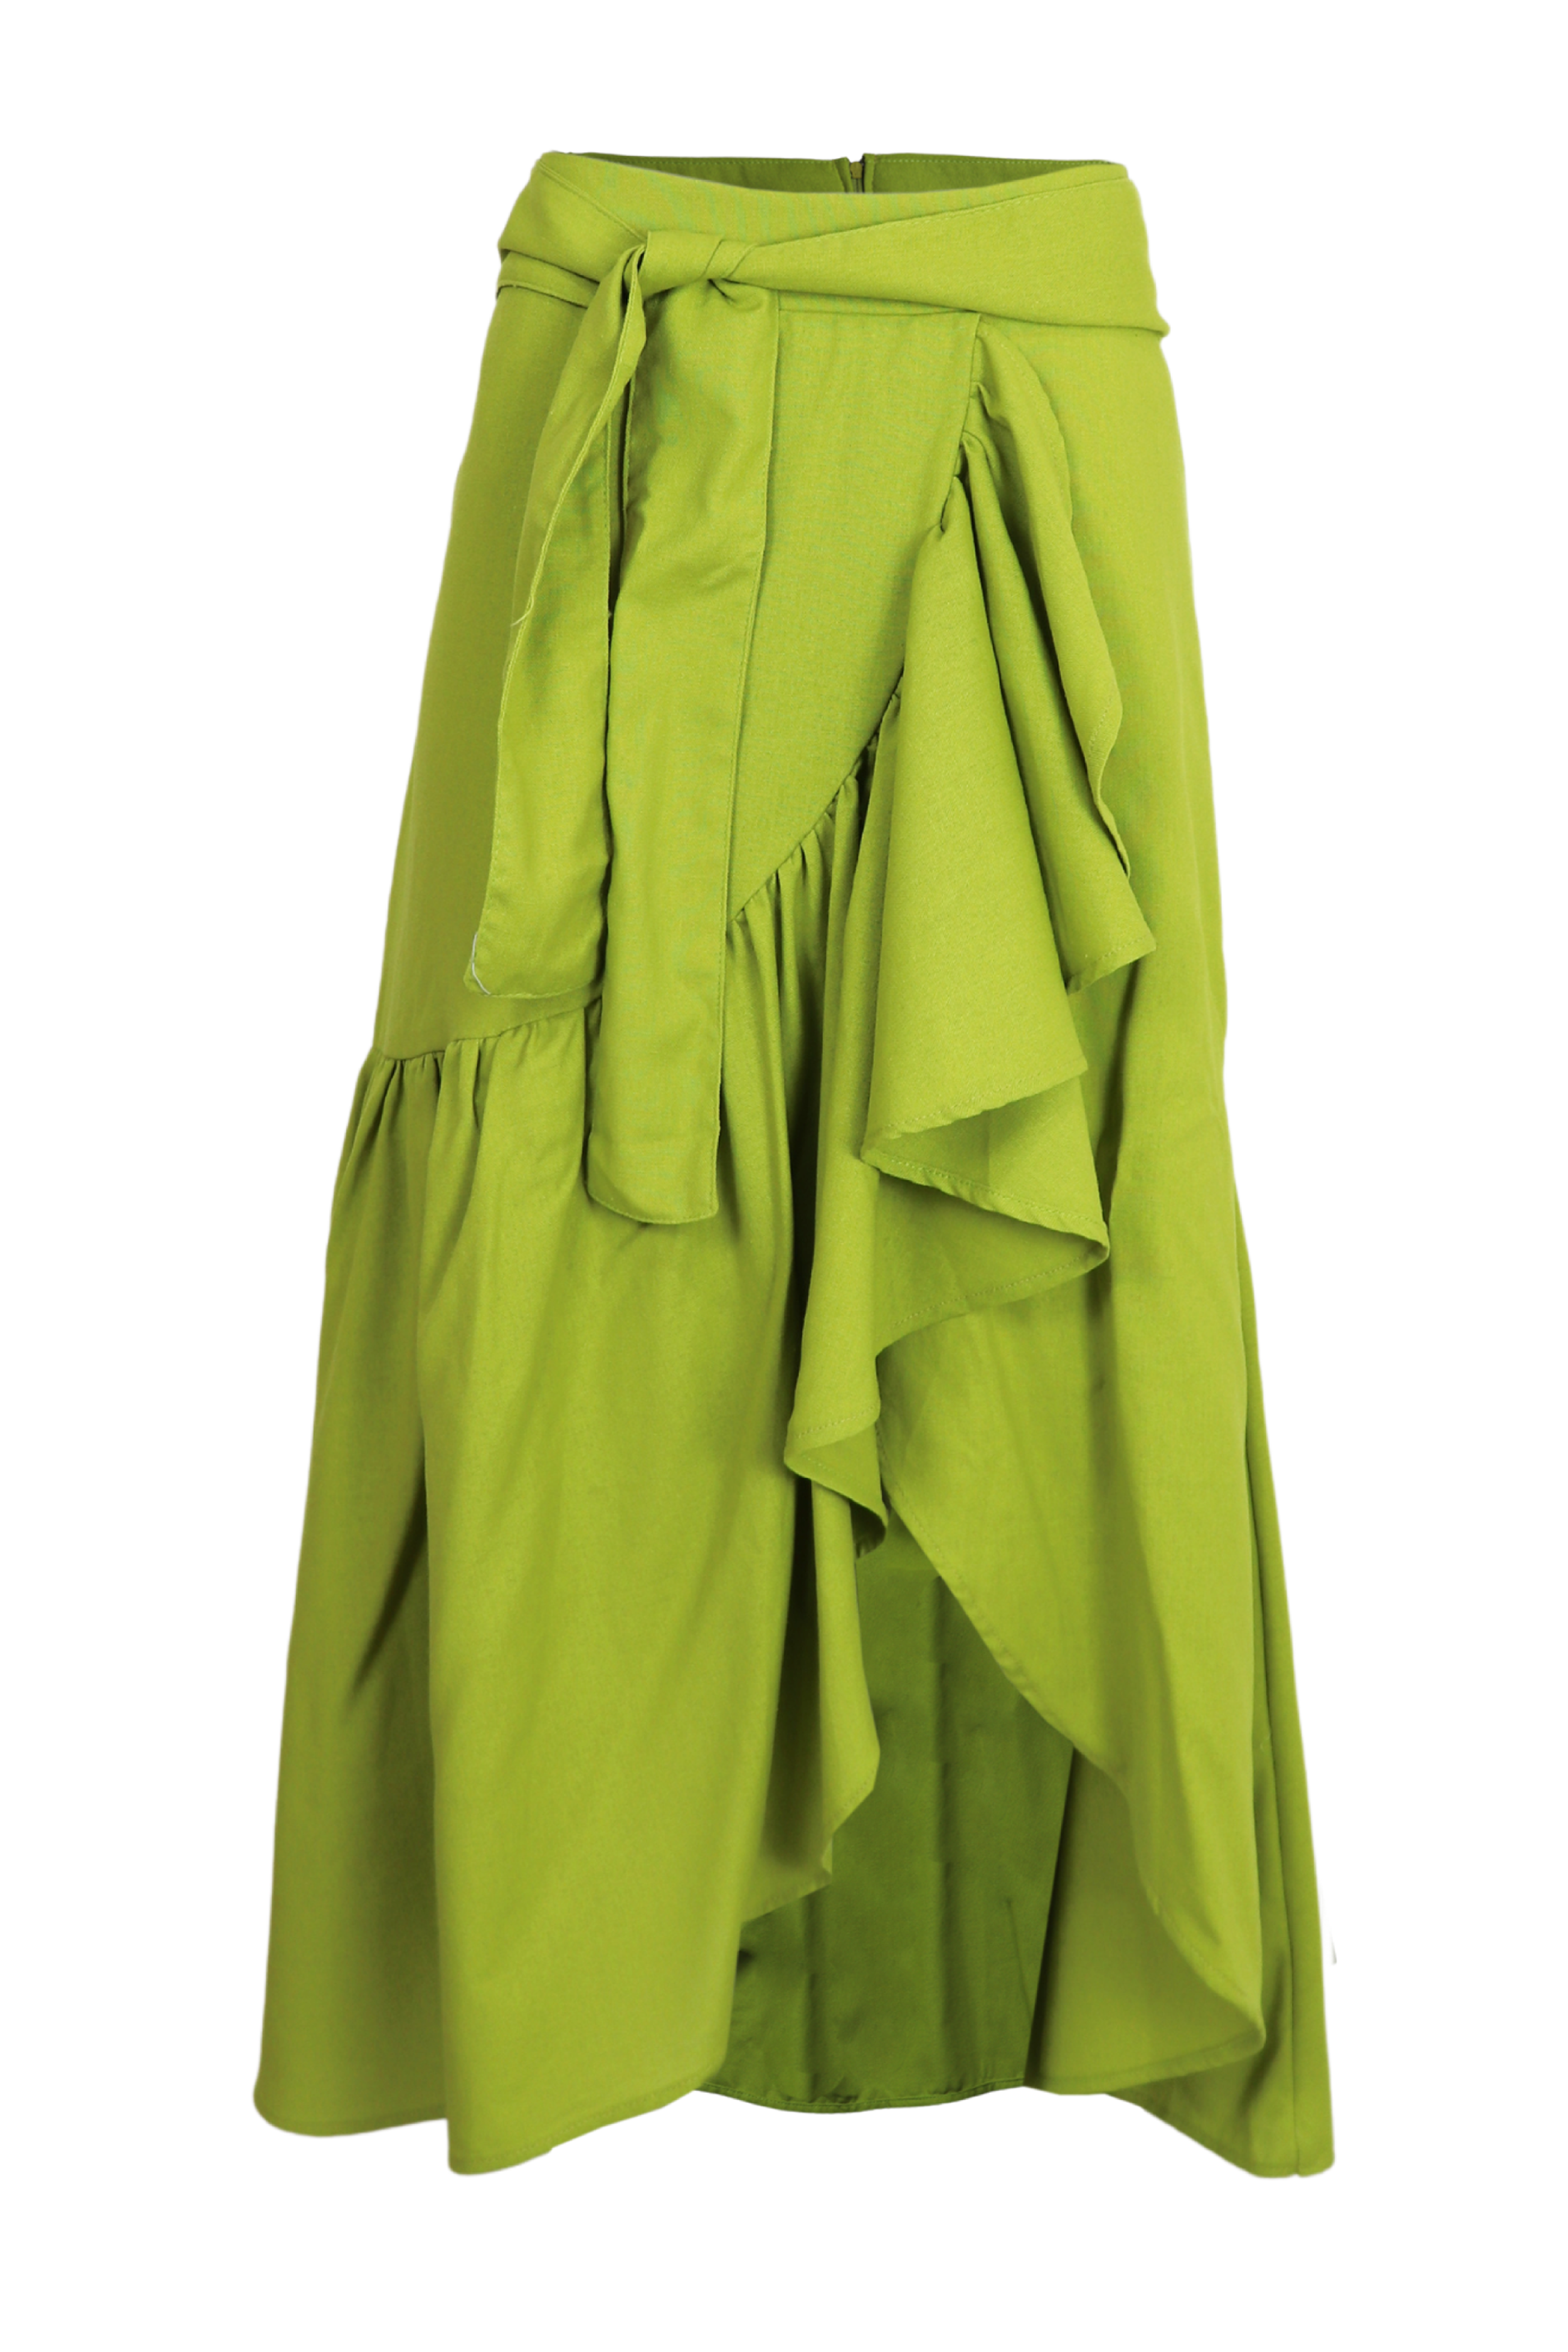 Hermosa falda color verde limon 